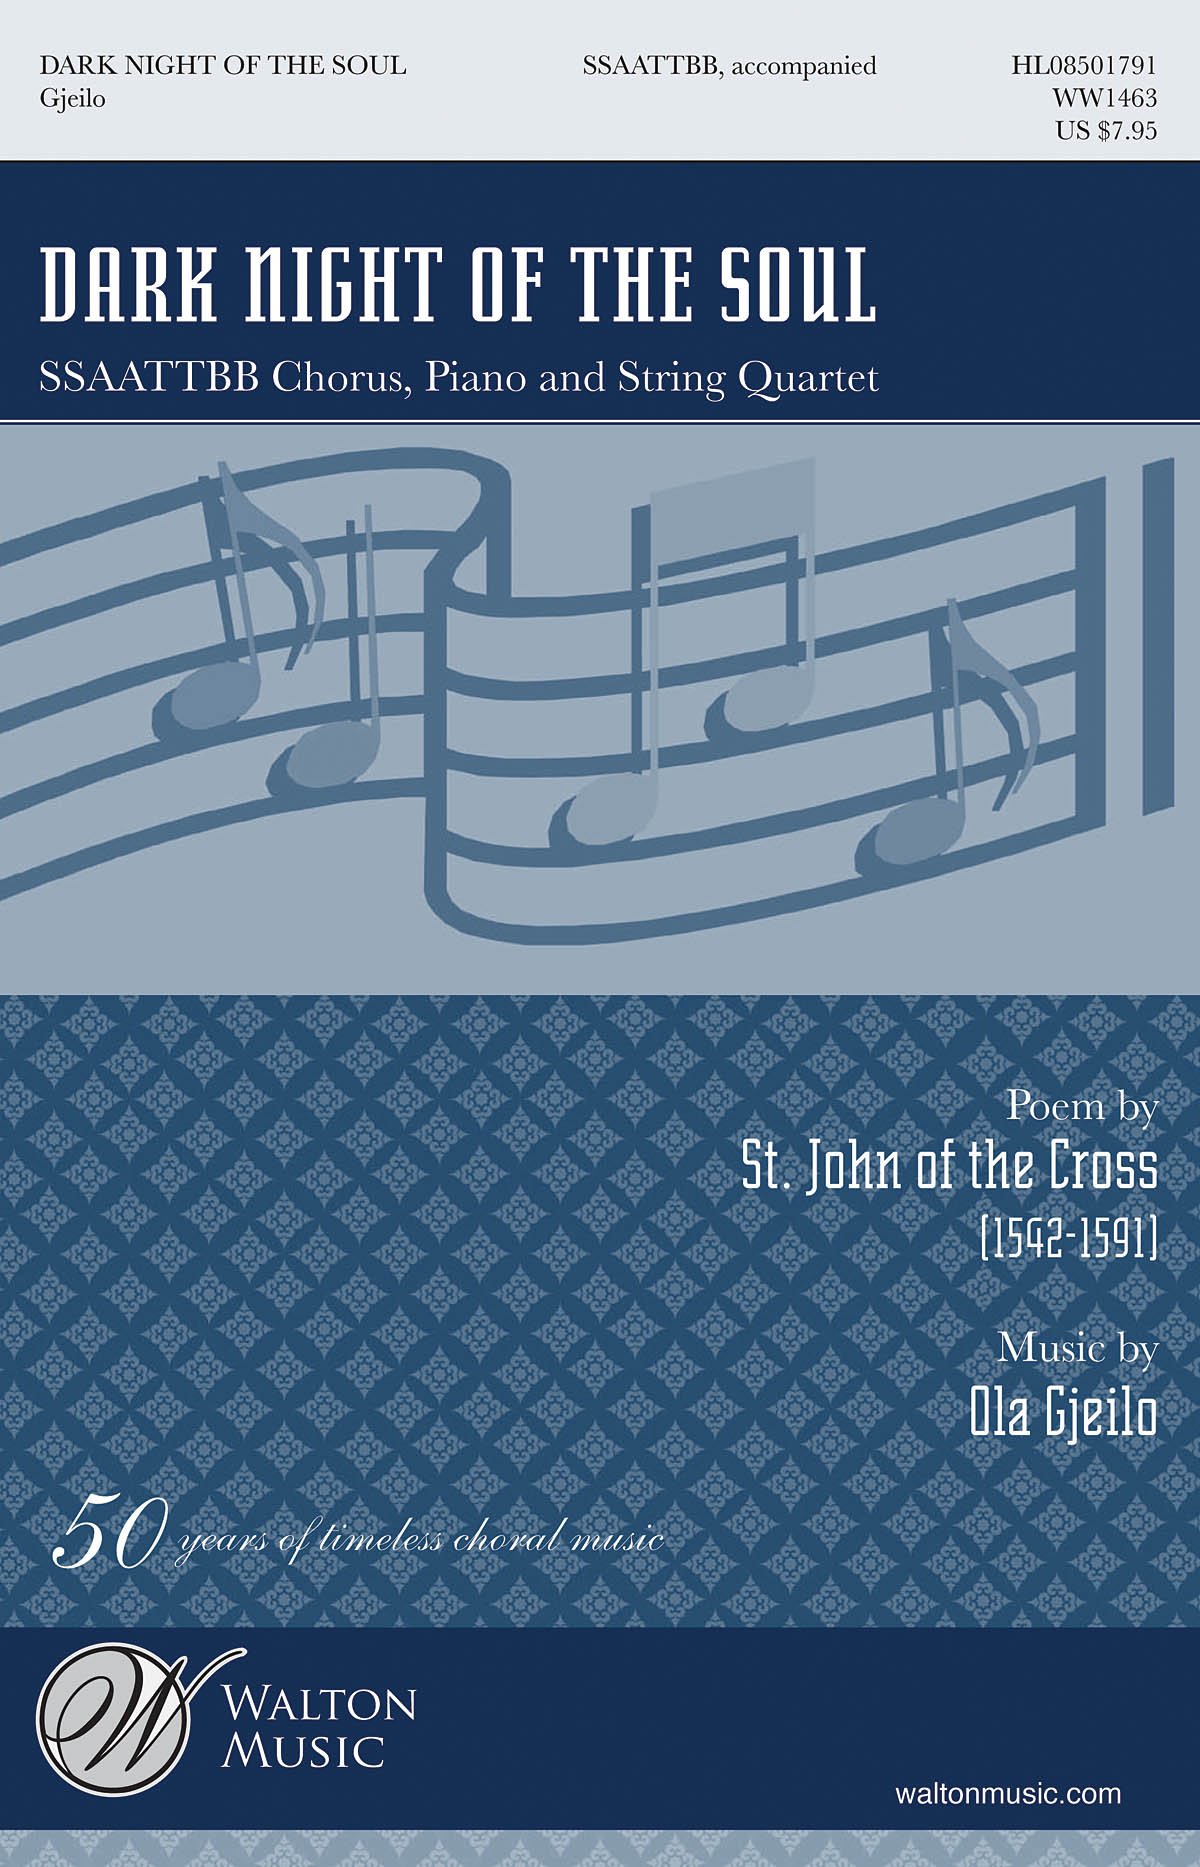 Dark Night of the Soul - SSAATTBB with Piano and String Quartet - noty pro sbor SSAATTBB, klavír a smyčcový kvartet